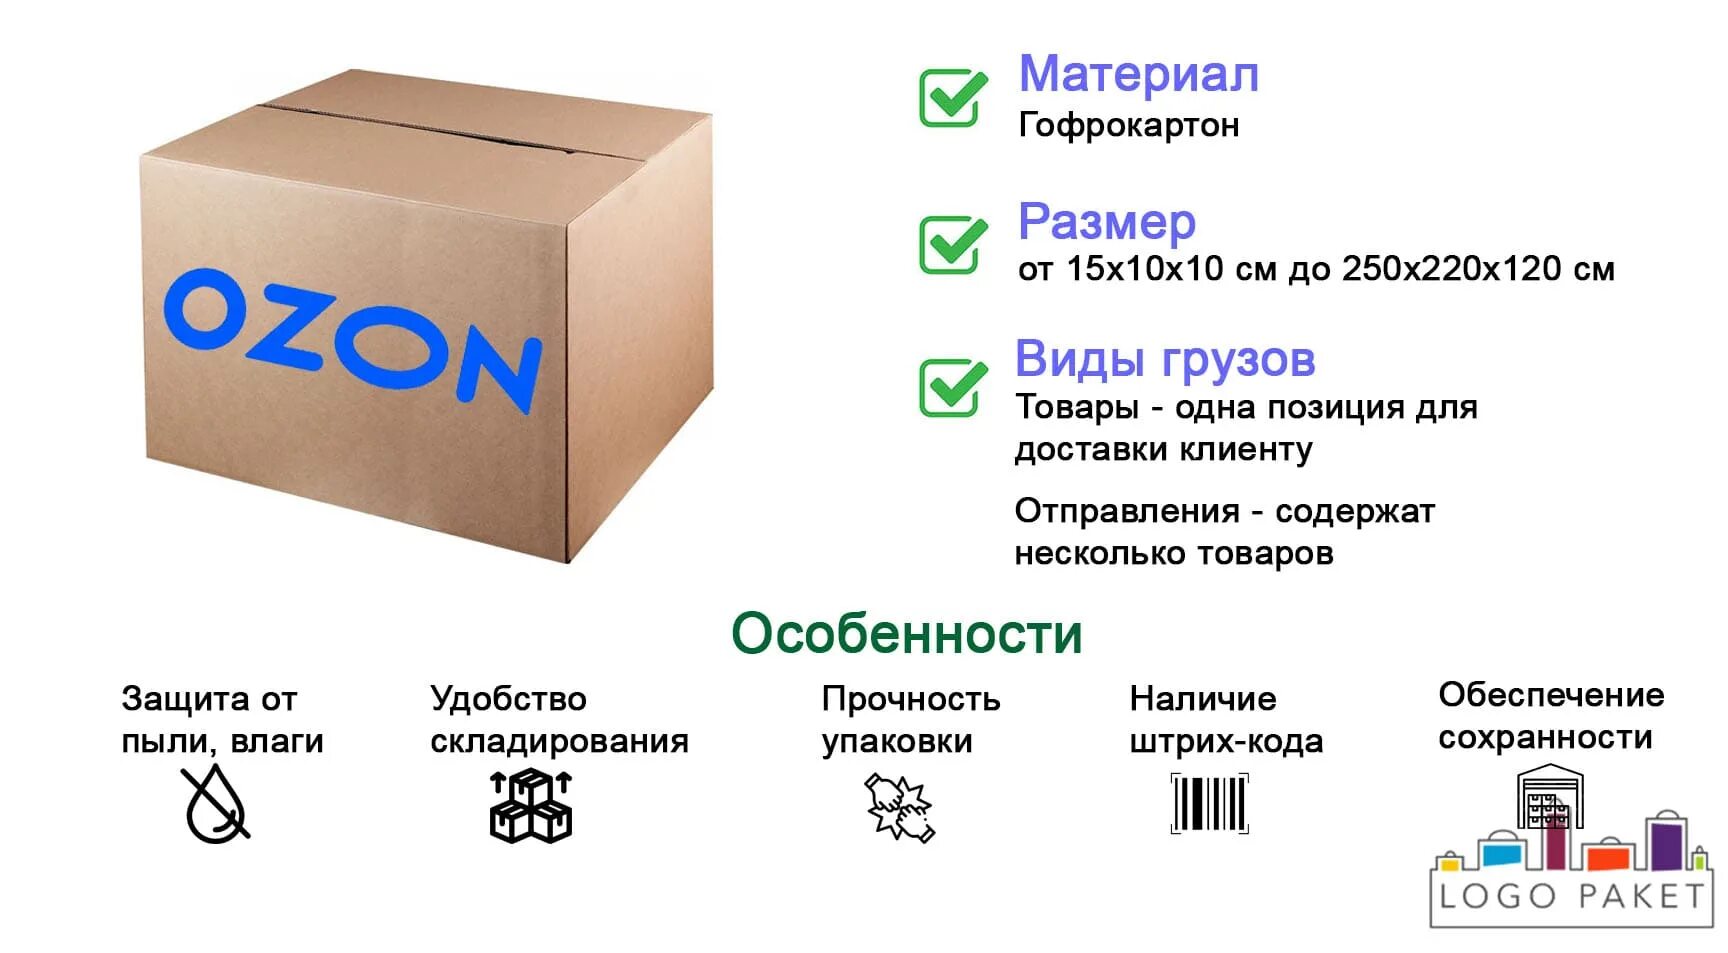 Как отправить товар на склад озон. Коробки Озон. Размер коробки Озон. Коробка для Озон Размеры. Упаковка посылок Озон.